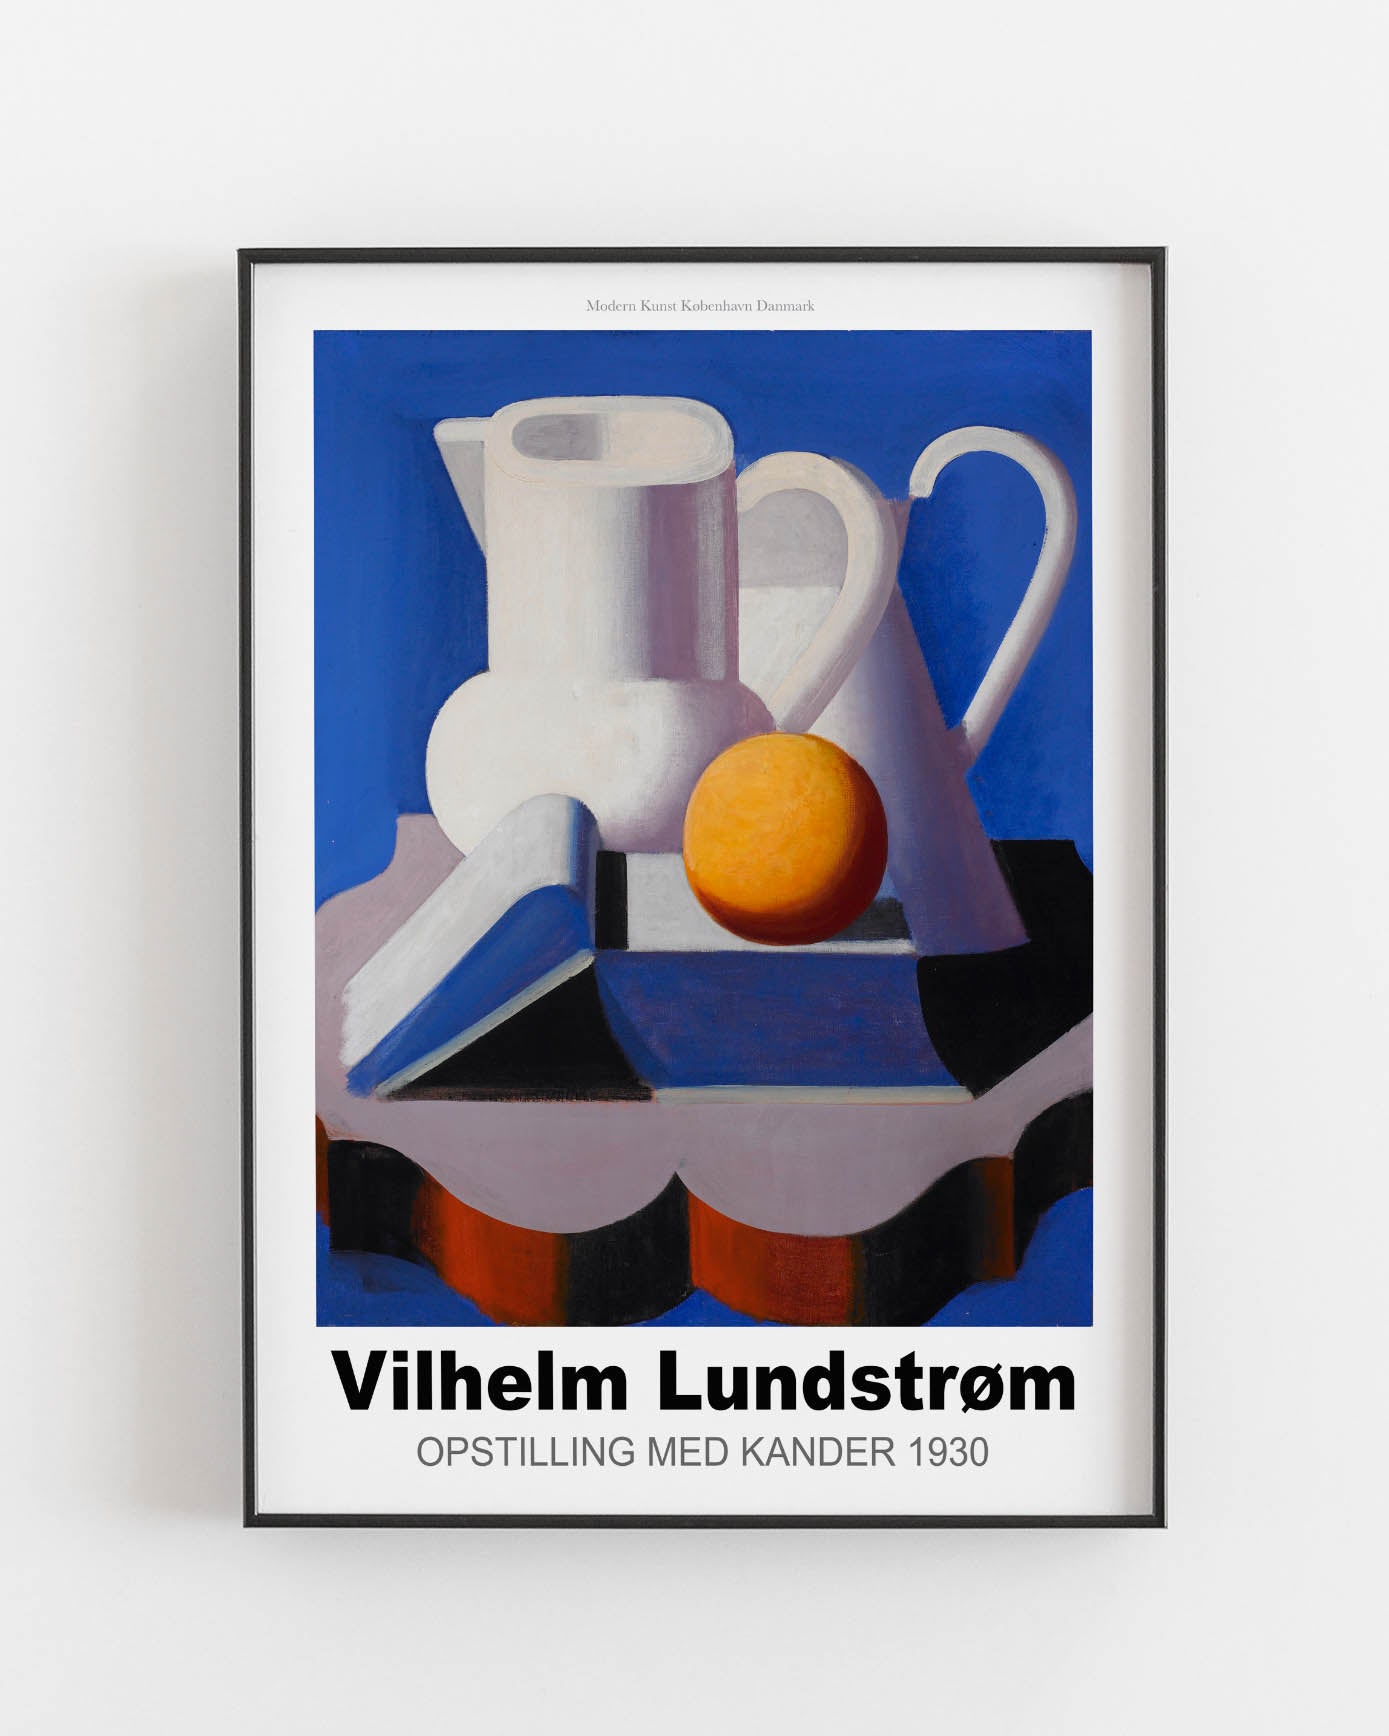 Vilhelm Lundstrom